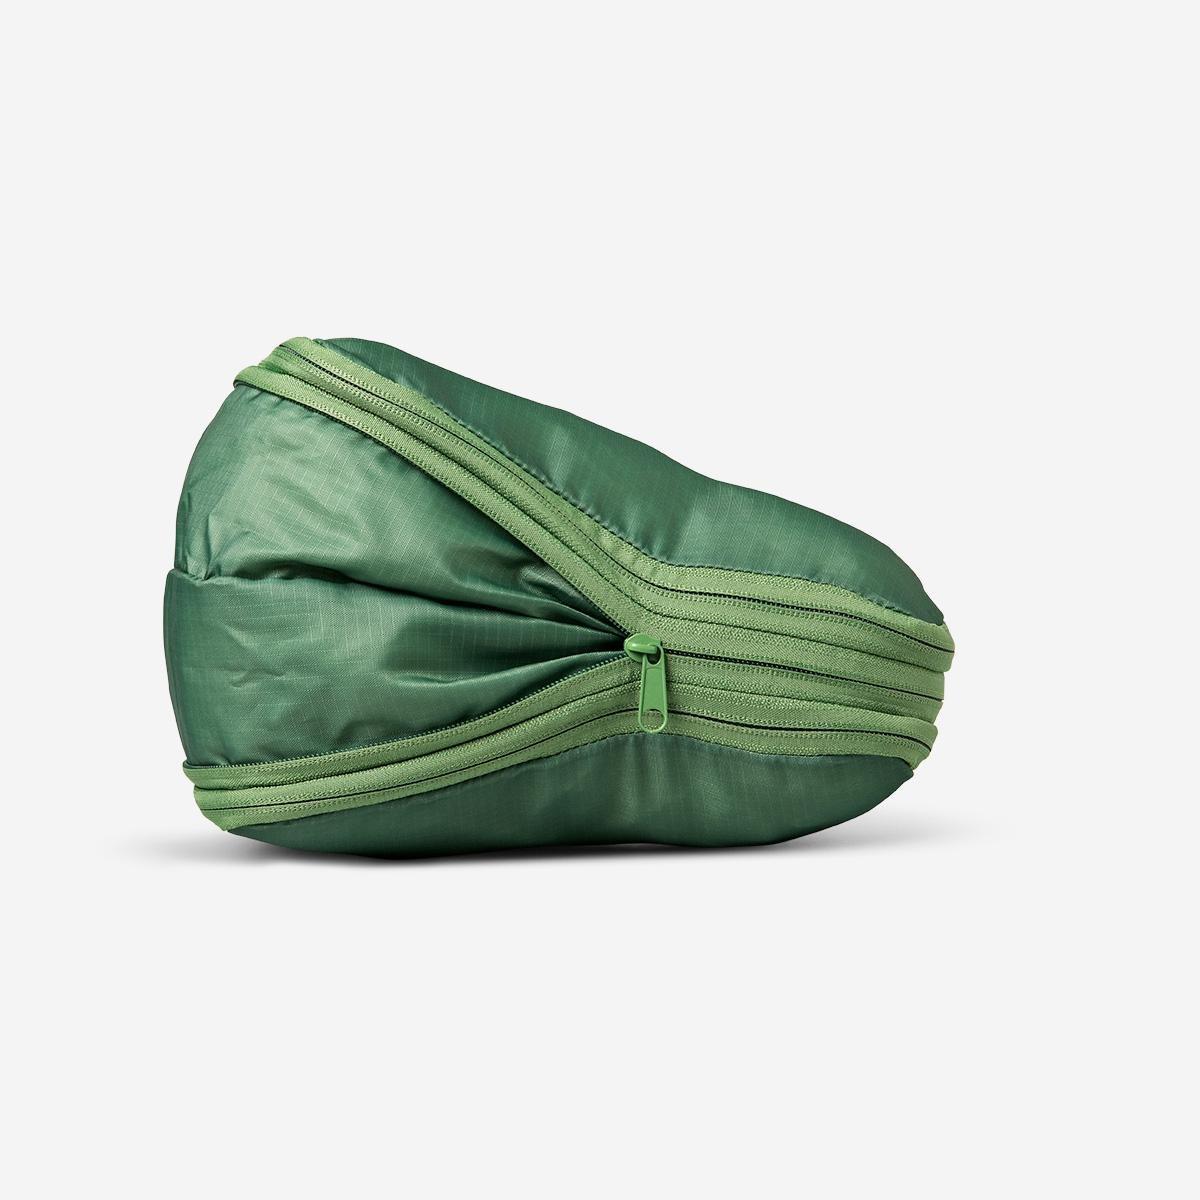 Green compression organiser bag. small